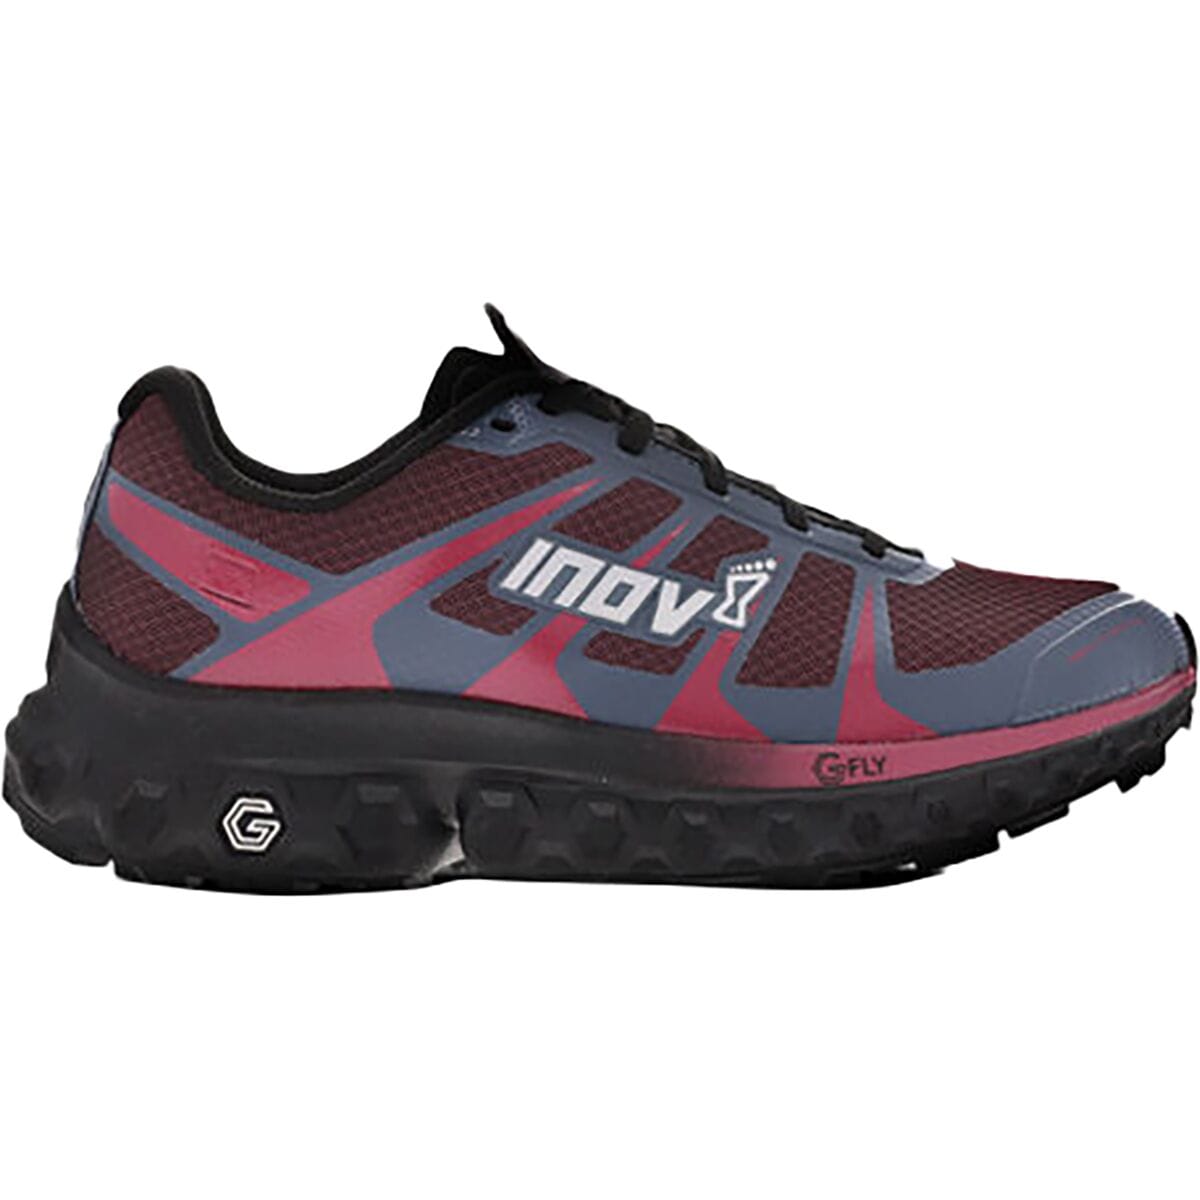 Обувь trailfly ultra g 300 Inov 8, цвет purple/navy цена и фото